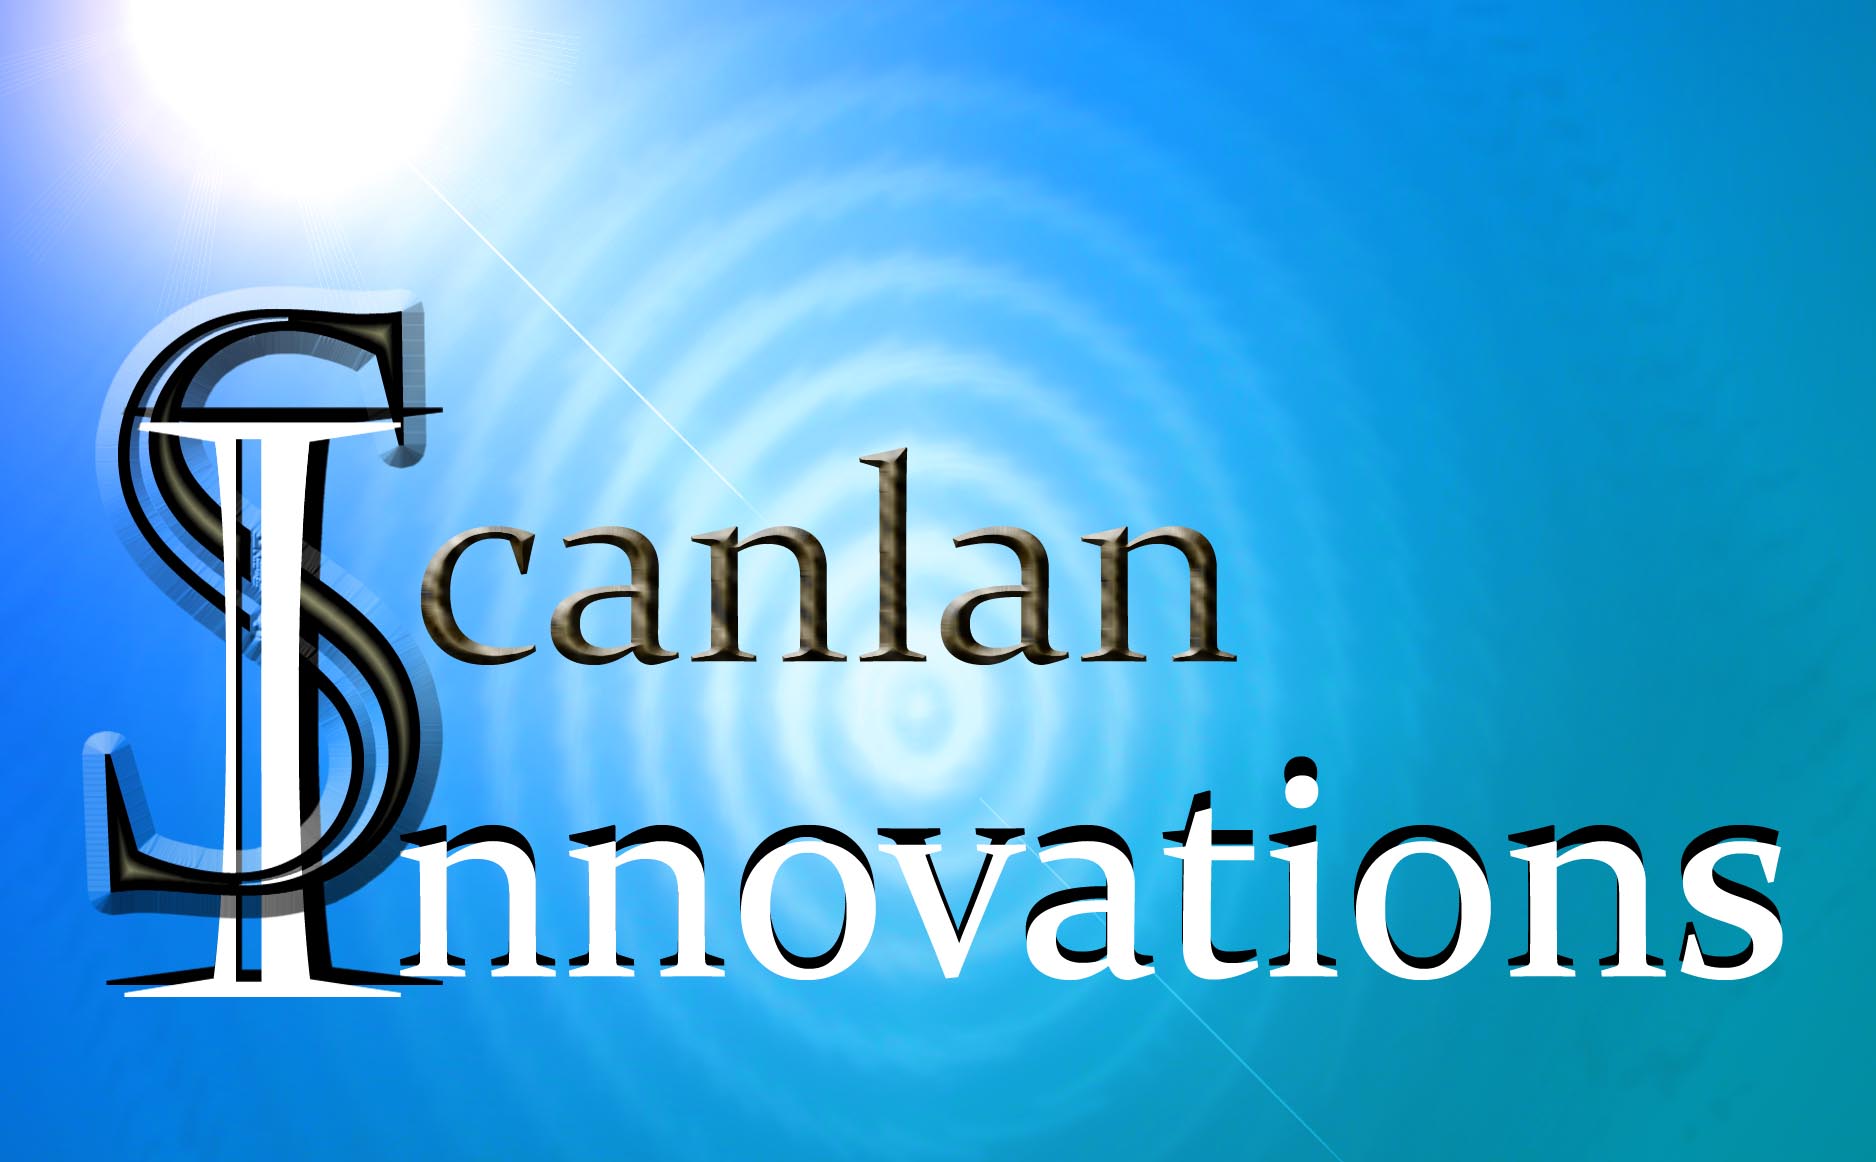 Scanlan Innovations